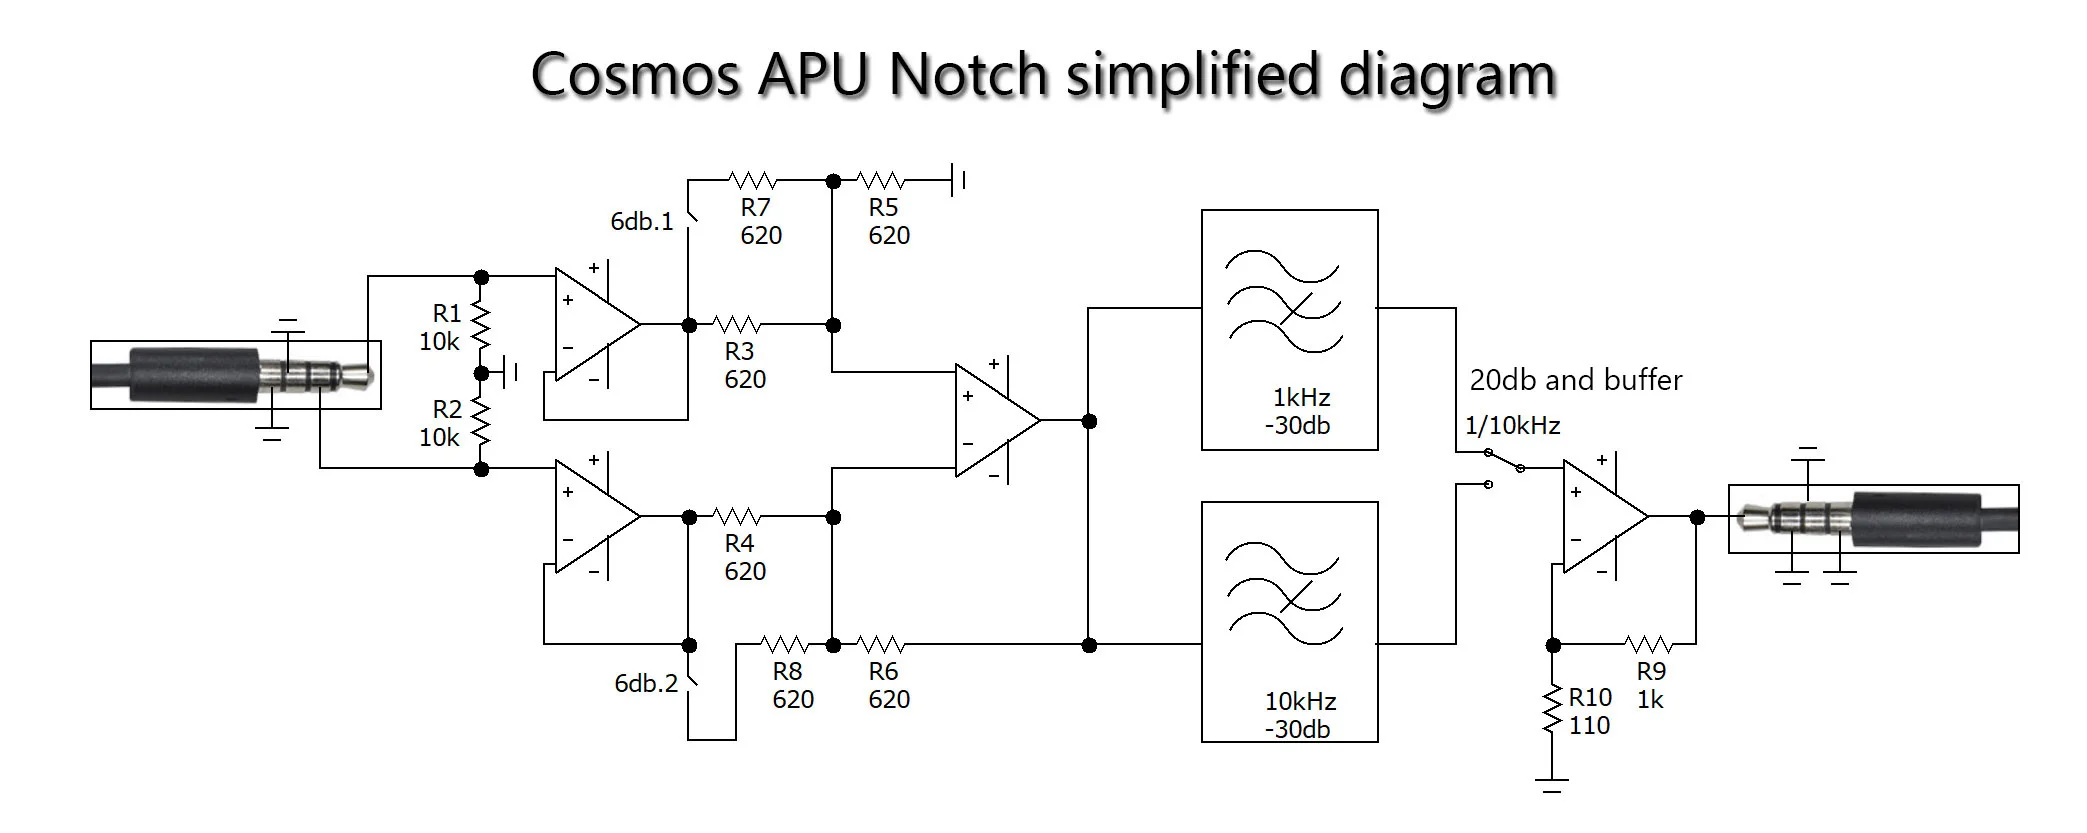 Cosmos_APU_Notch_simplified_diagram.png